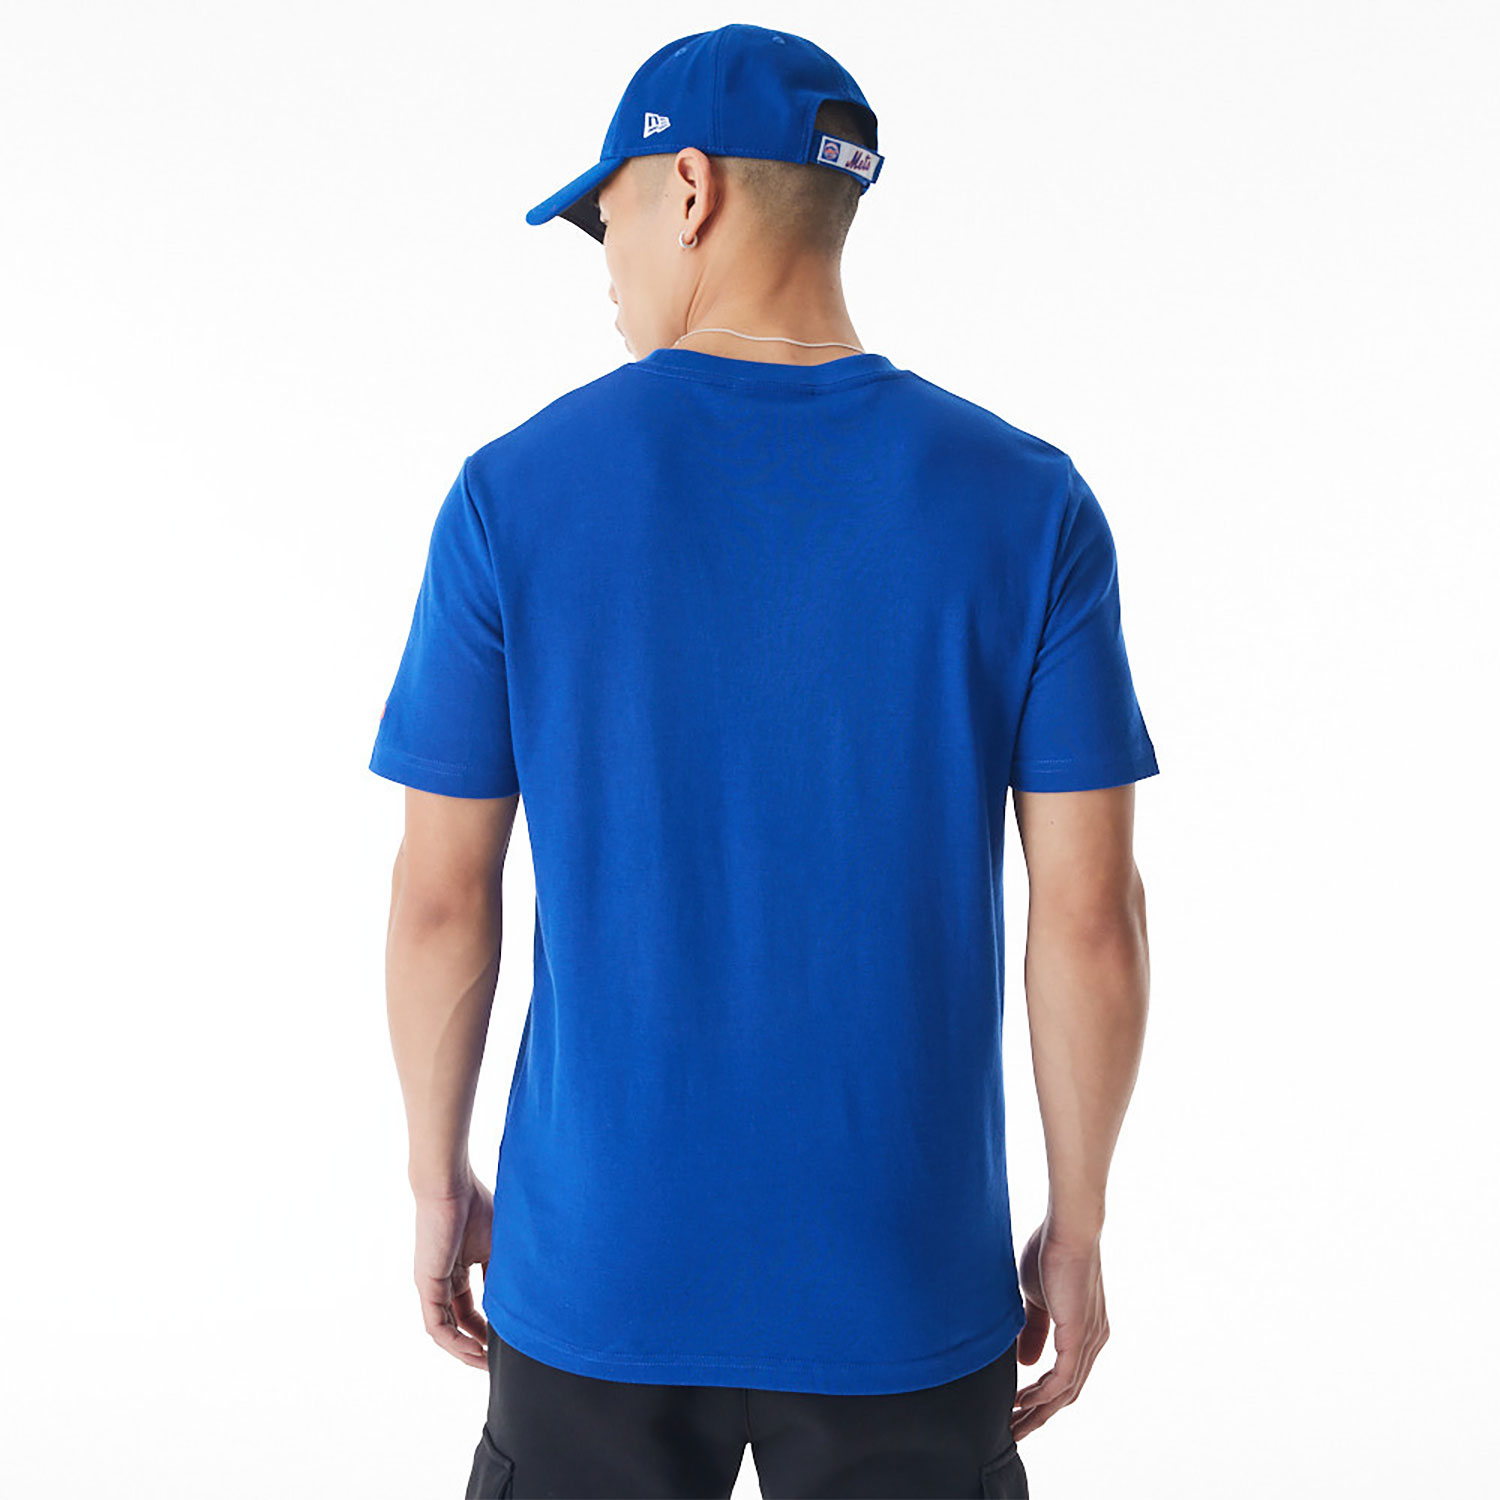 New York Mets MLB Batting Practice Blue T-Shirt